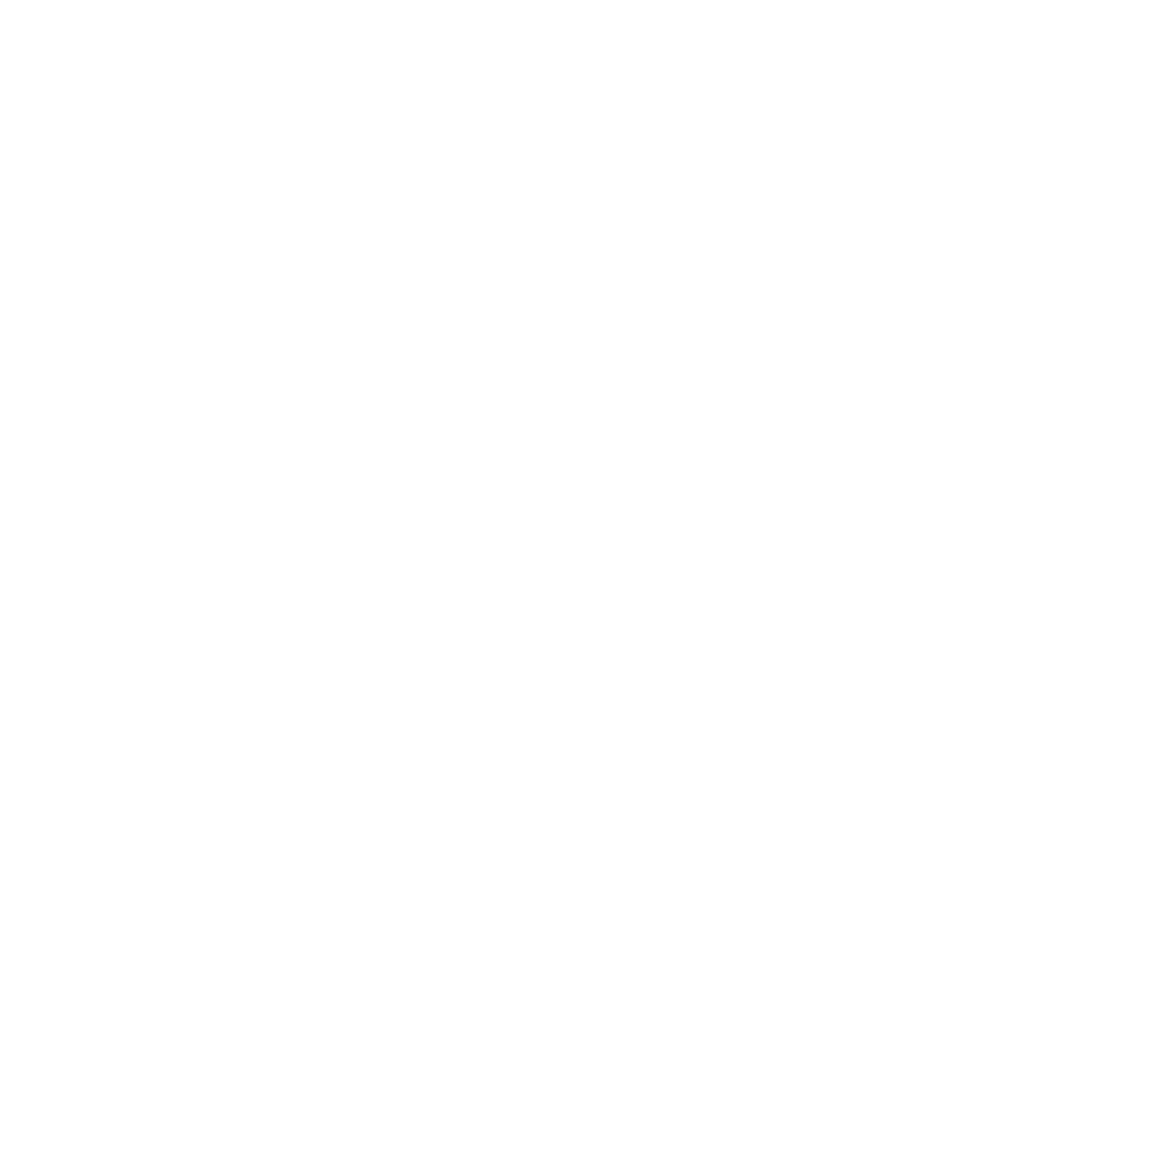 seat service